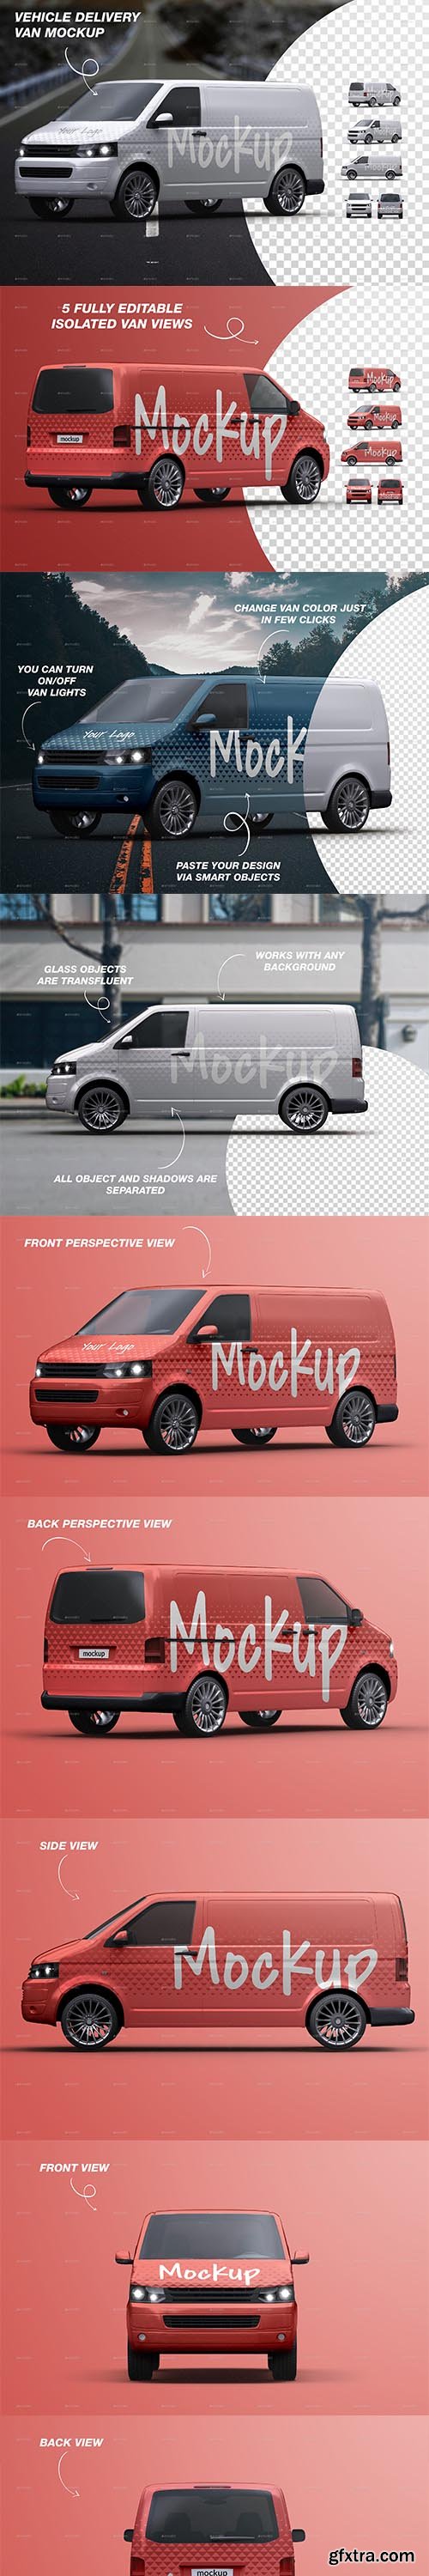 GraphicRiver - Vehicle Delivery Van Mockup 30465175